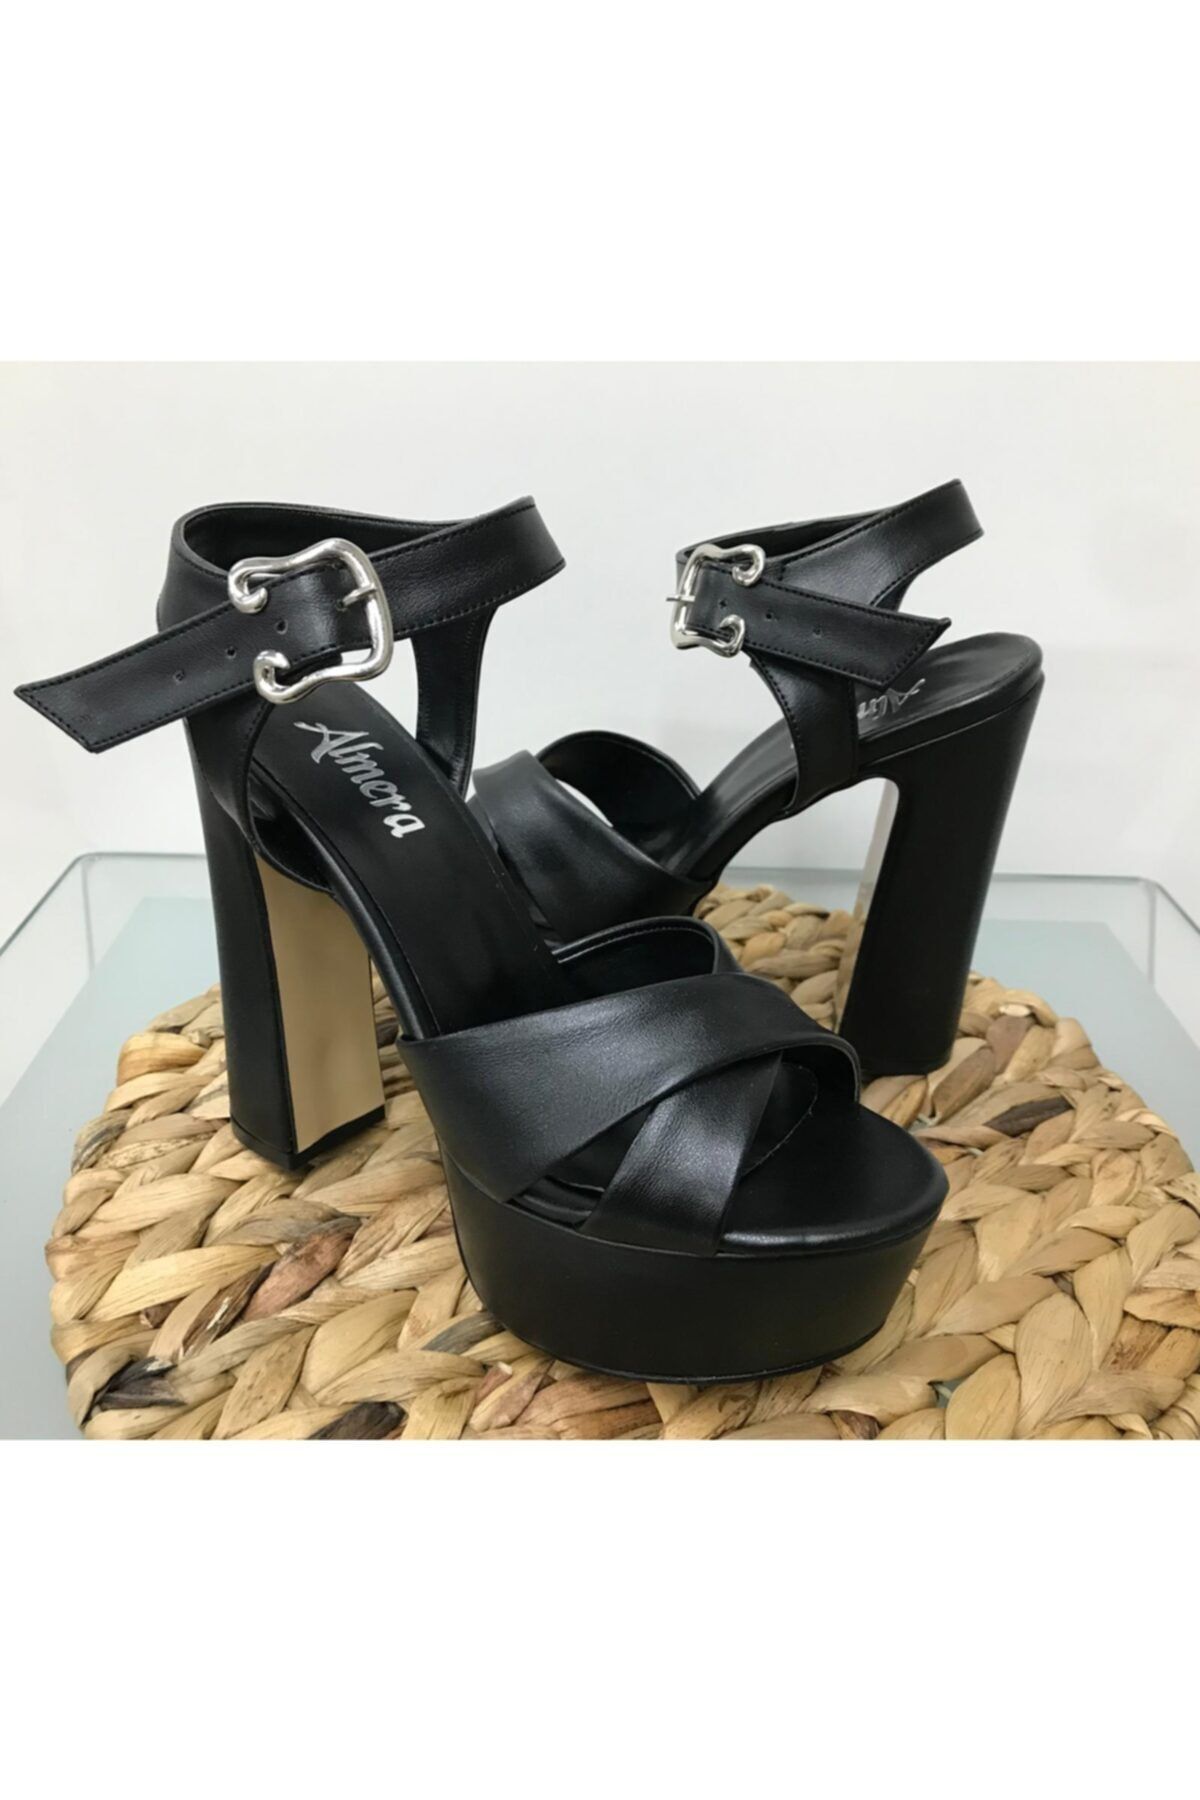 Almera's Shoes Siyah Platform Ayakkabı B0571